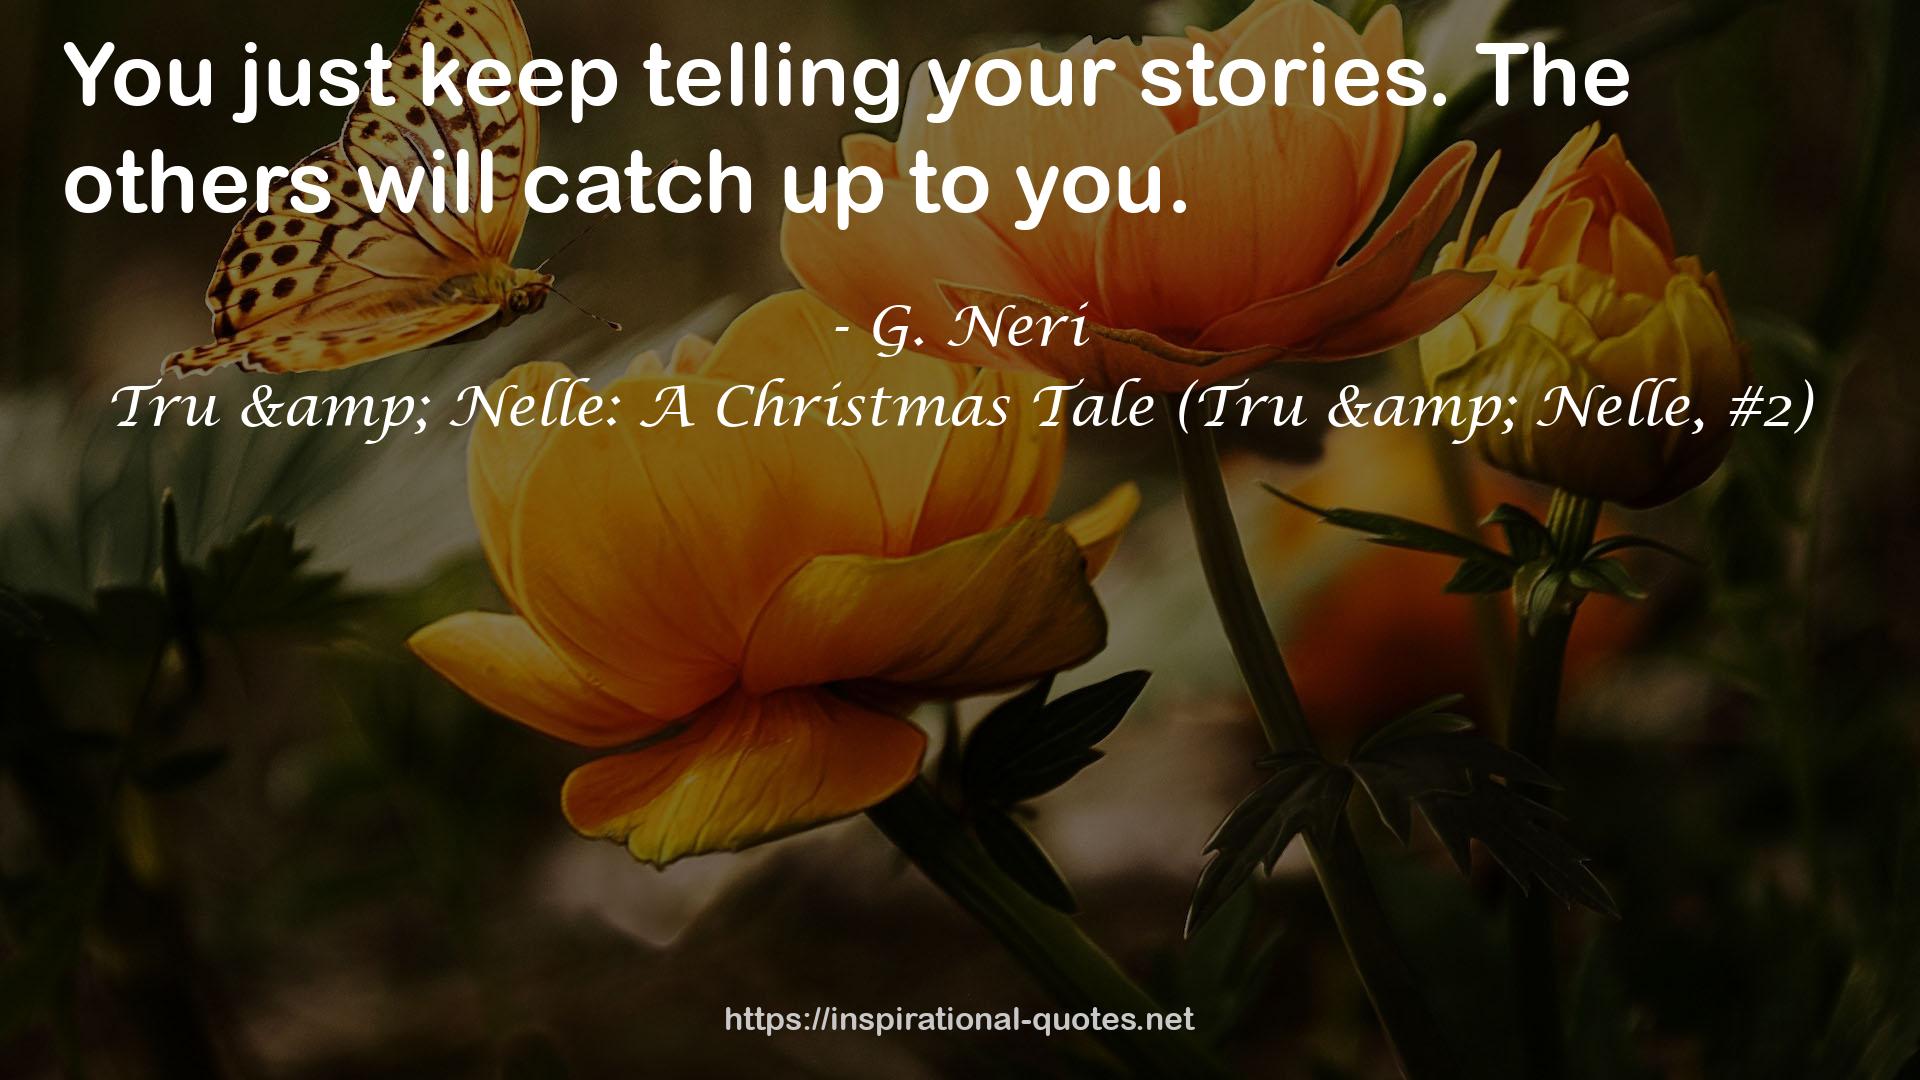 Tru & Nelle: A Christmas Tale (Tru & Nelle, #2) QUOTES